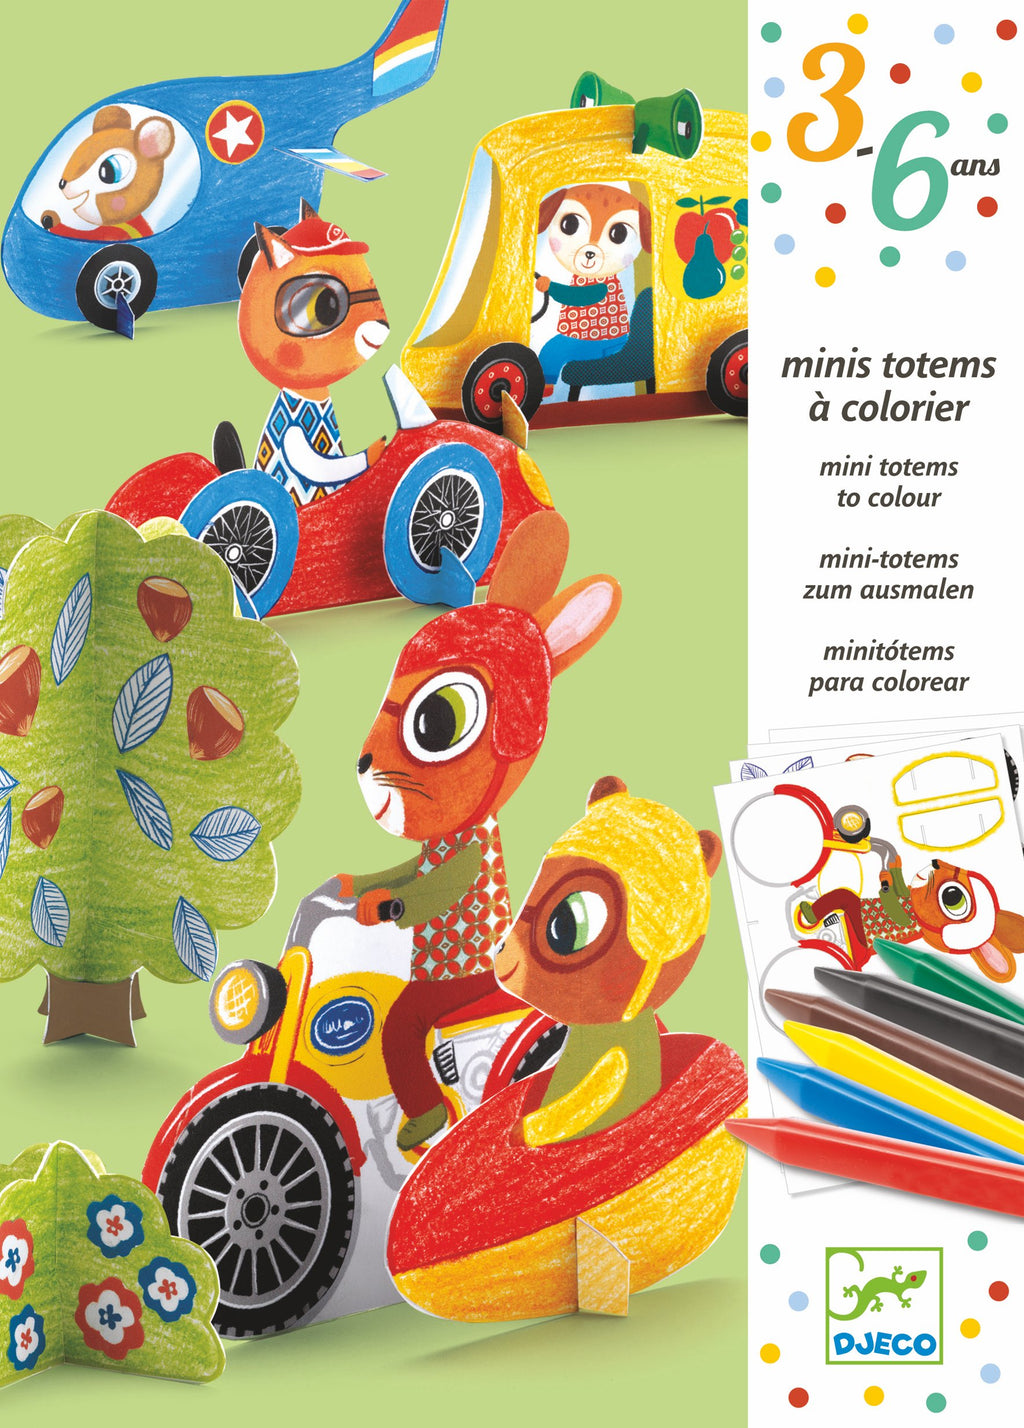 Djeco Mini Totems A Colour - Vroom Vroom - Da Da Kinder Store Singapore